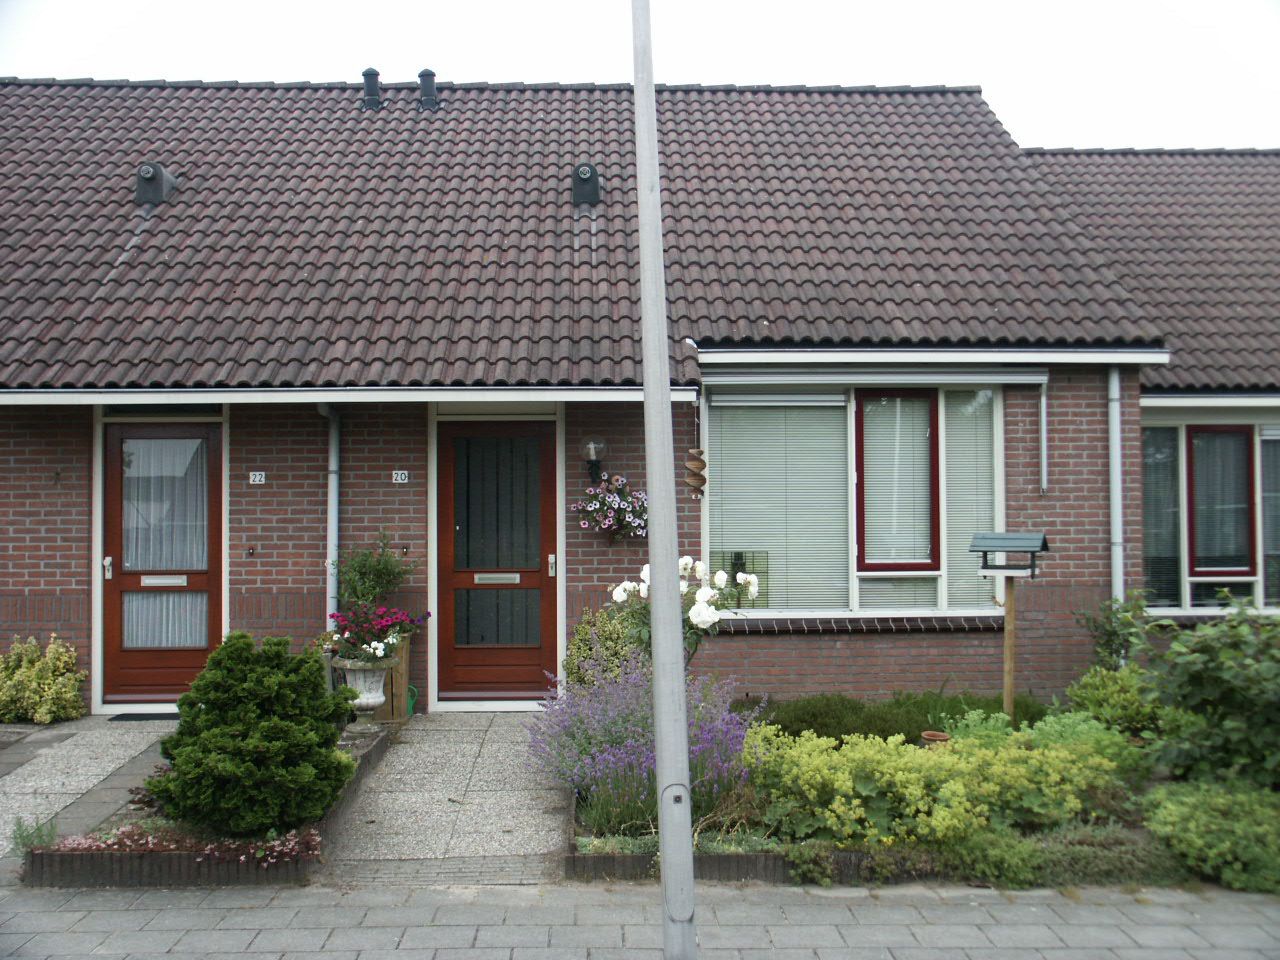 Caeciliënkamp 20, 7161 CV Neede, Nederland